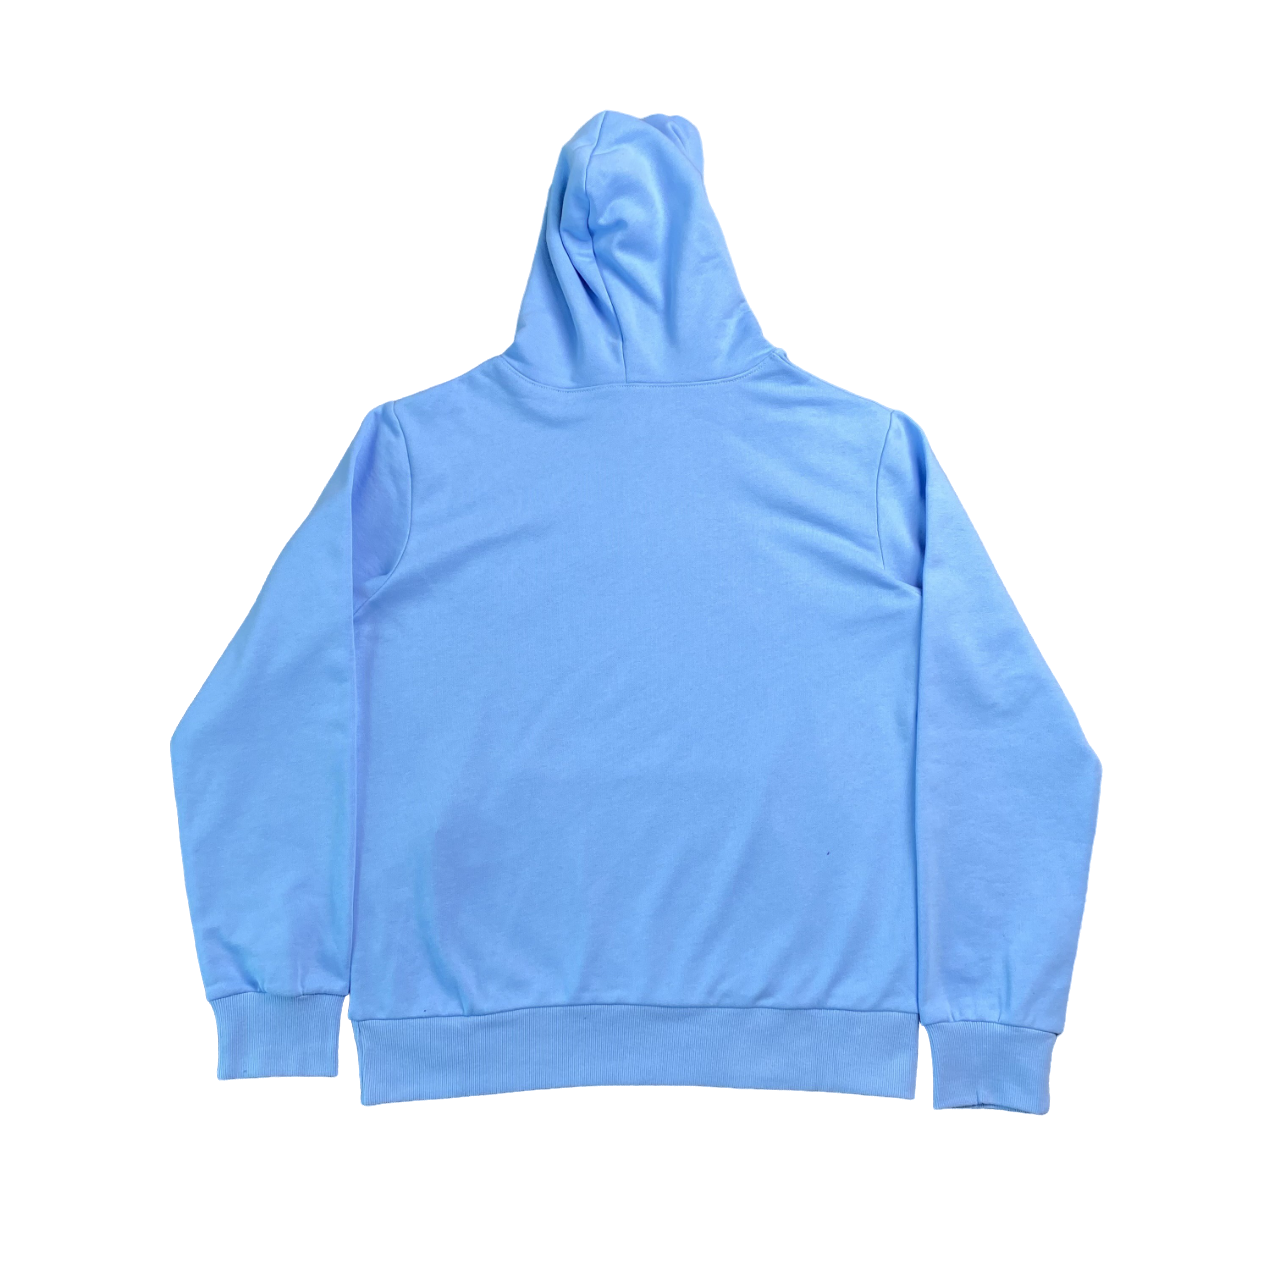 Sp5der hoodie sky blue size medium